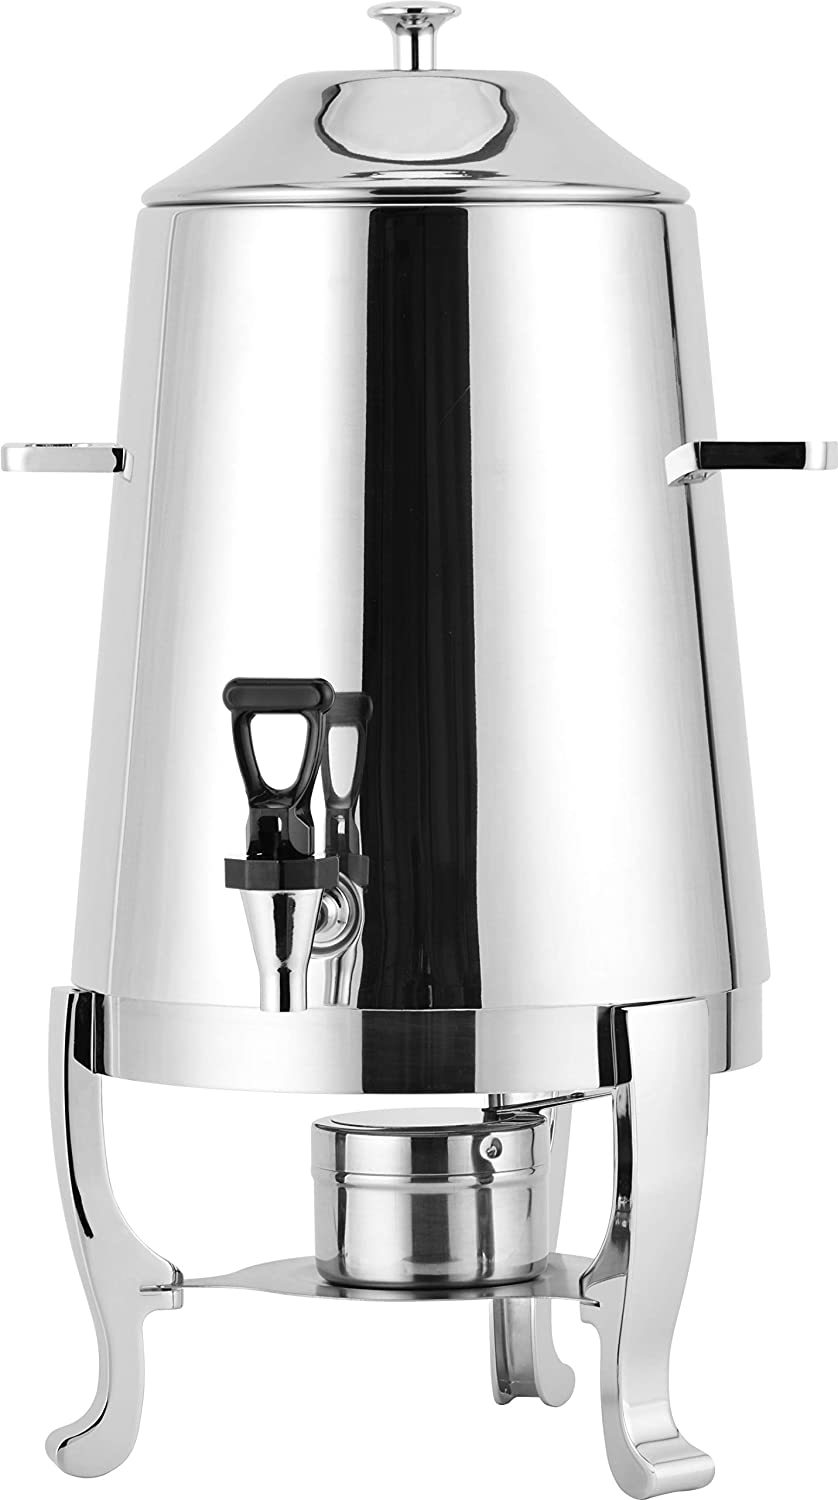 Stainless Steel Premium Tea/Coffee Dispenser or Urn for Buffet - 12 Liter